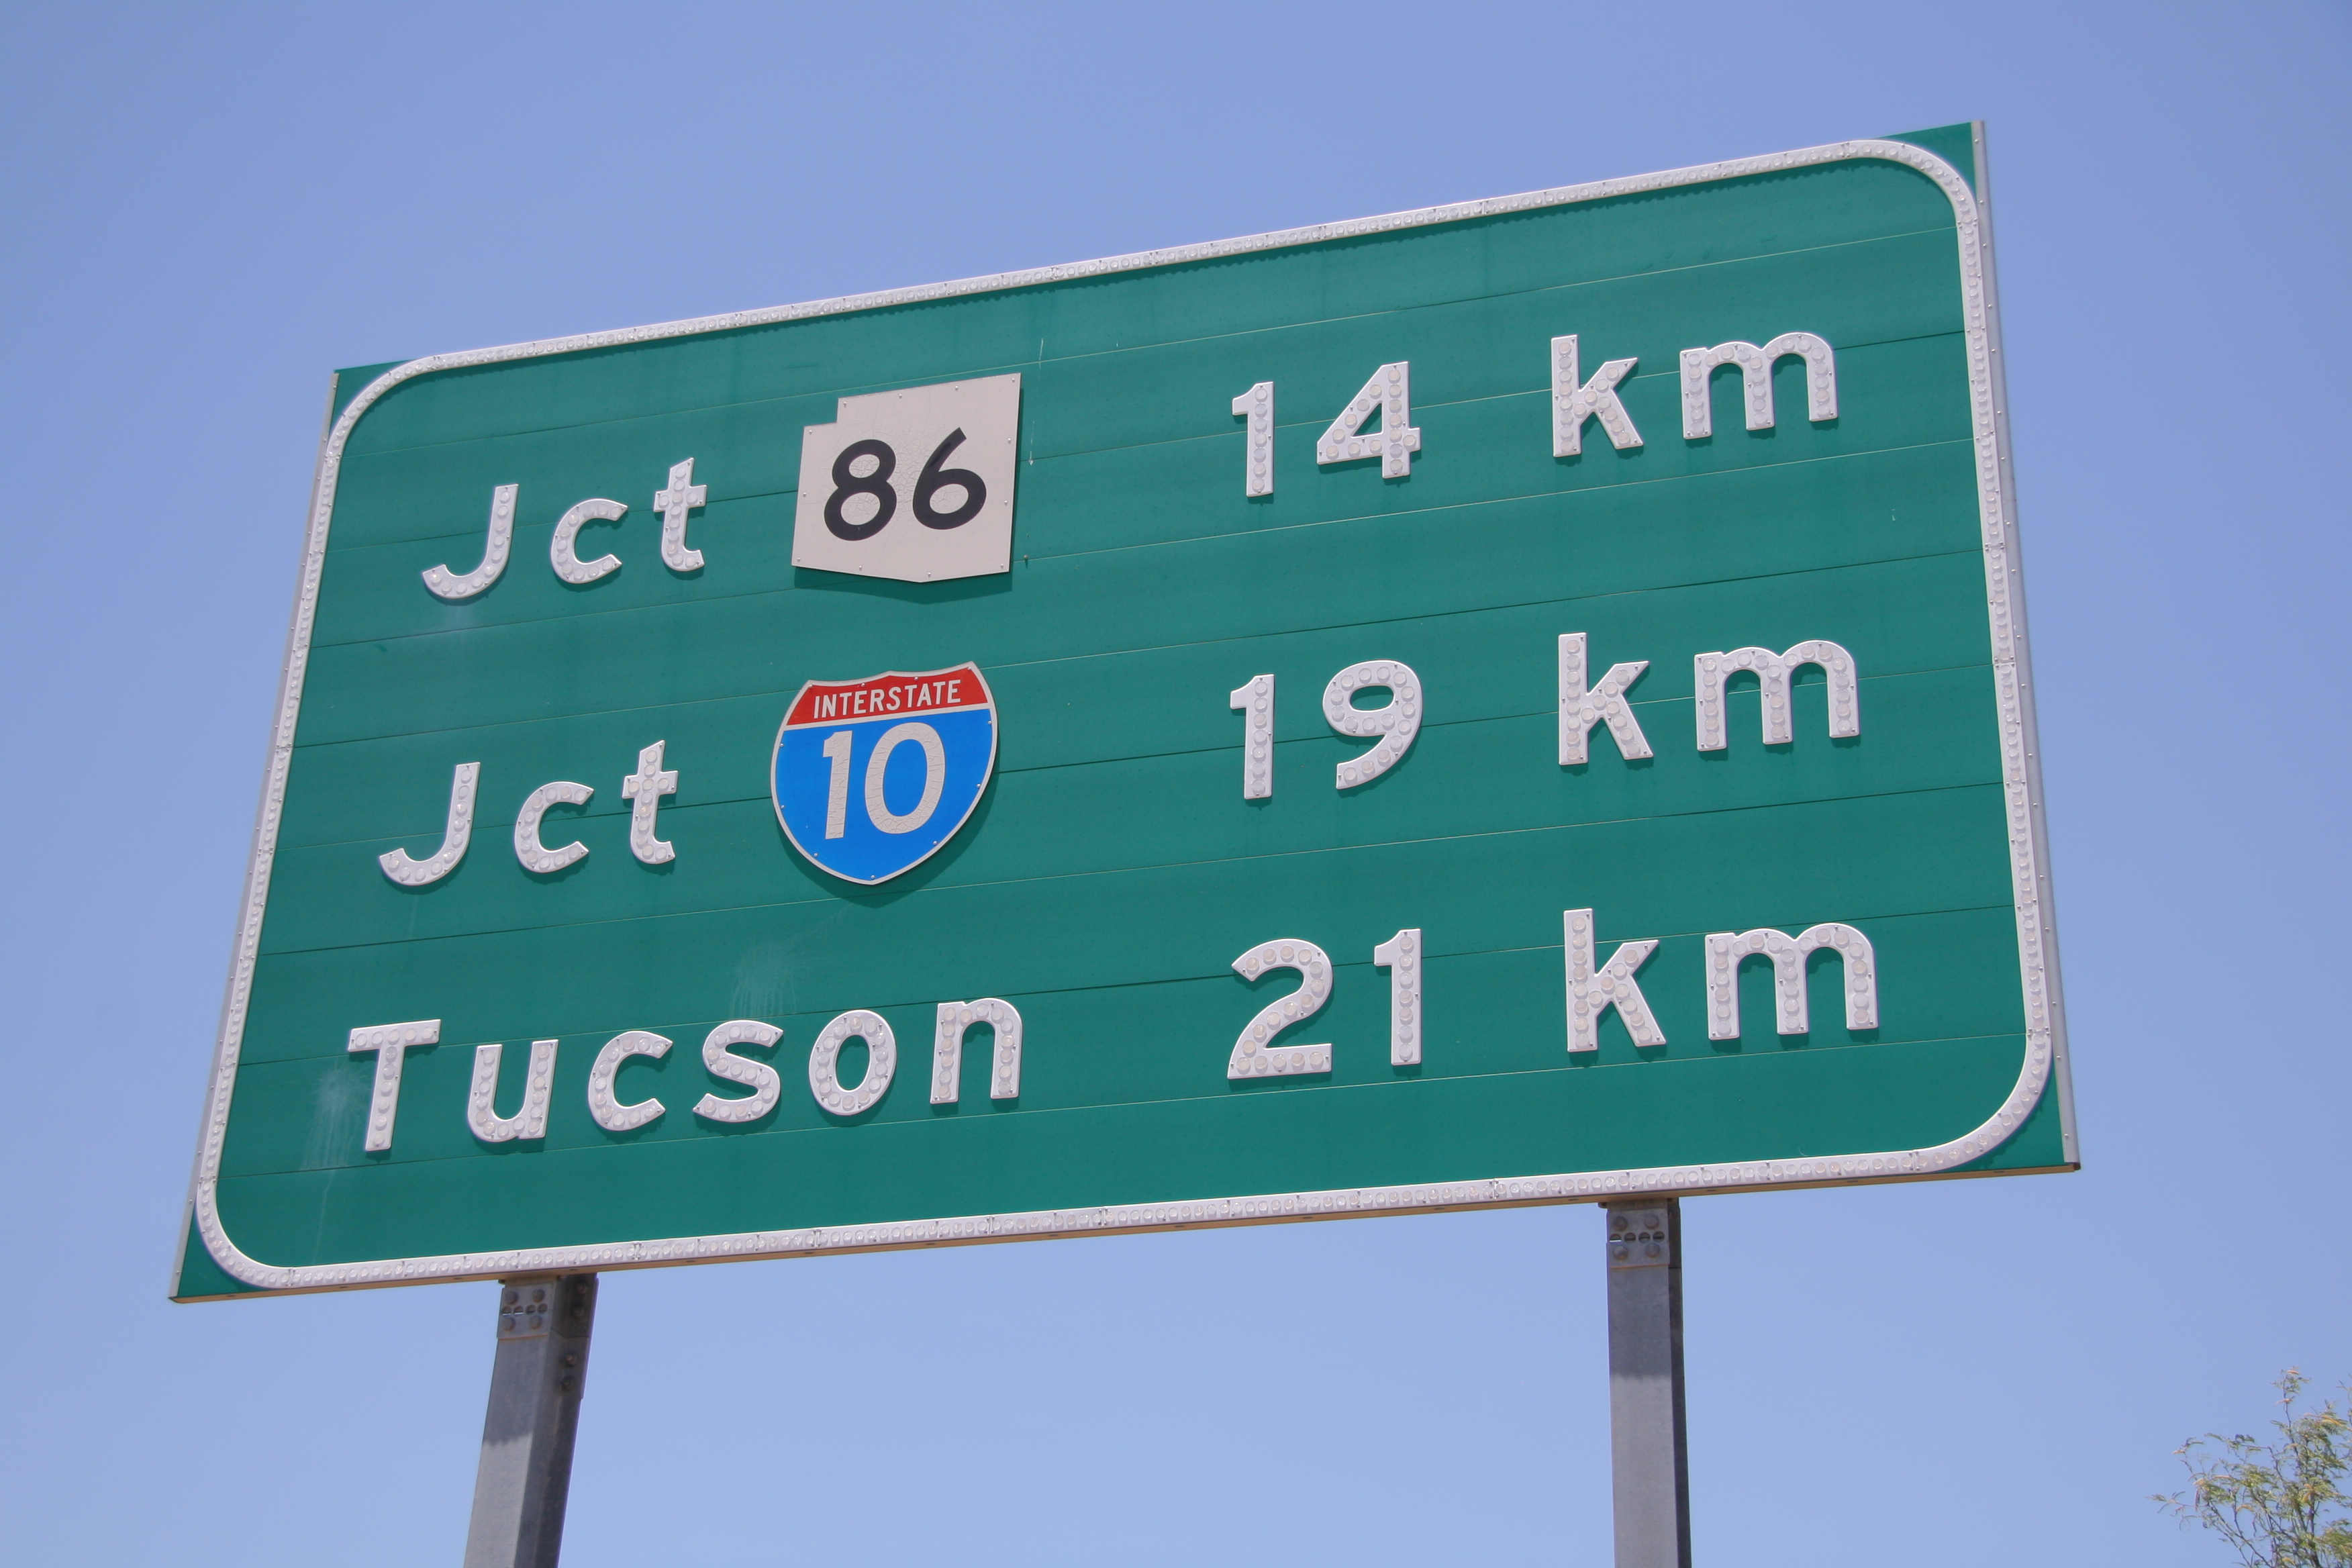 I-19 kilometer sign